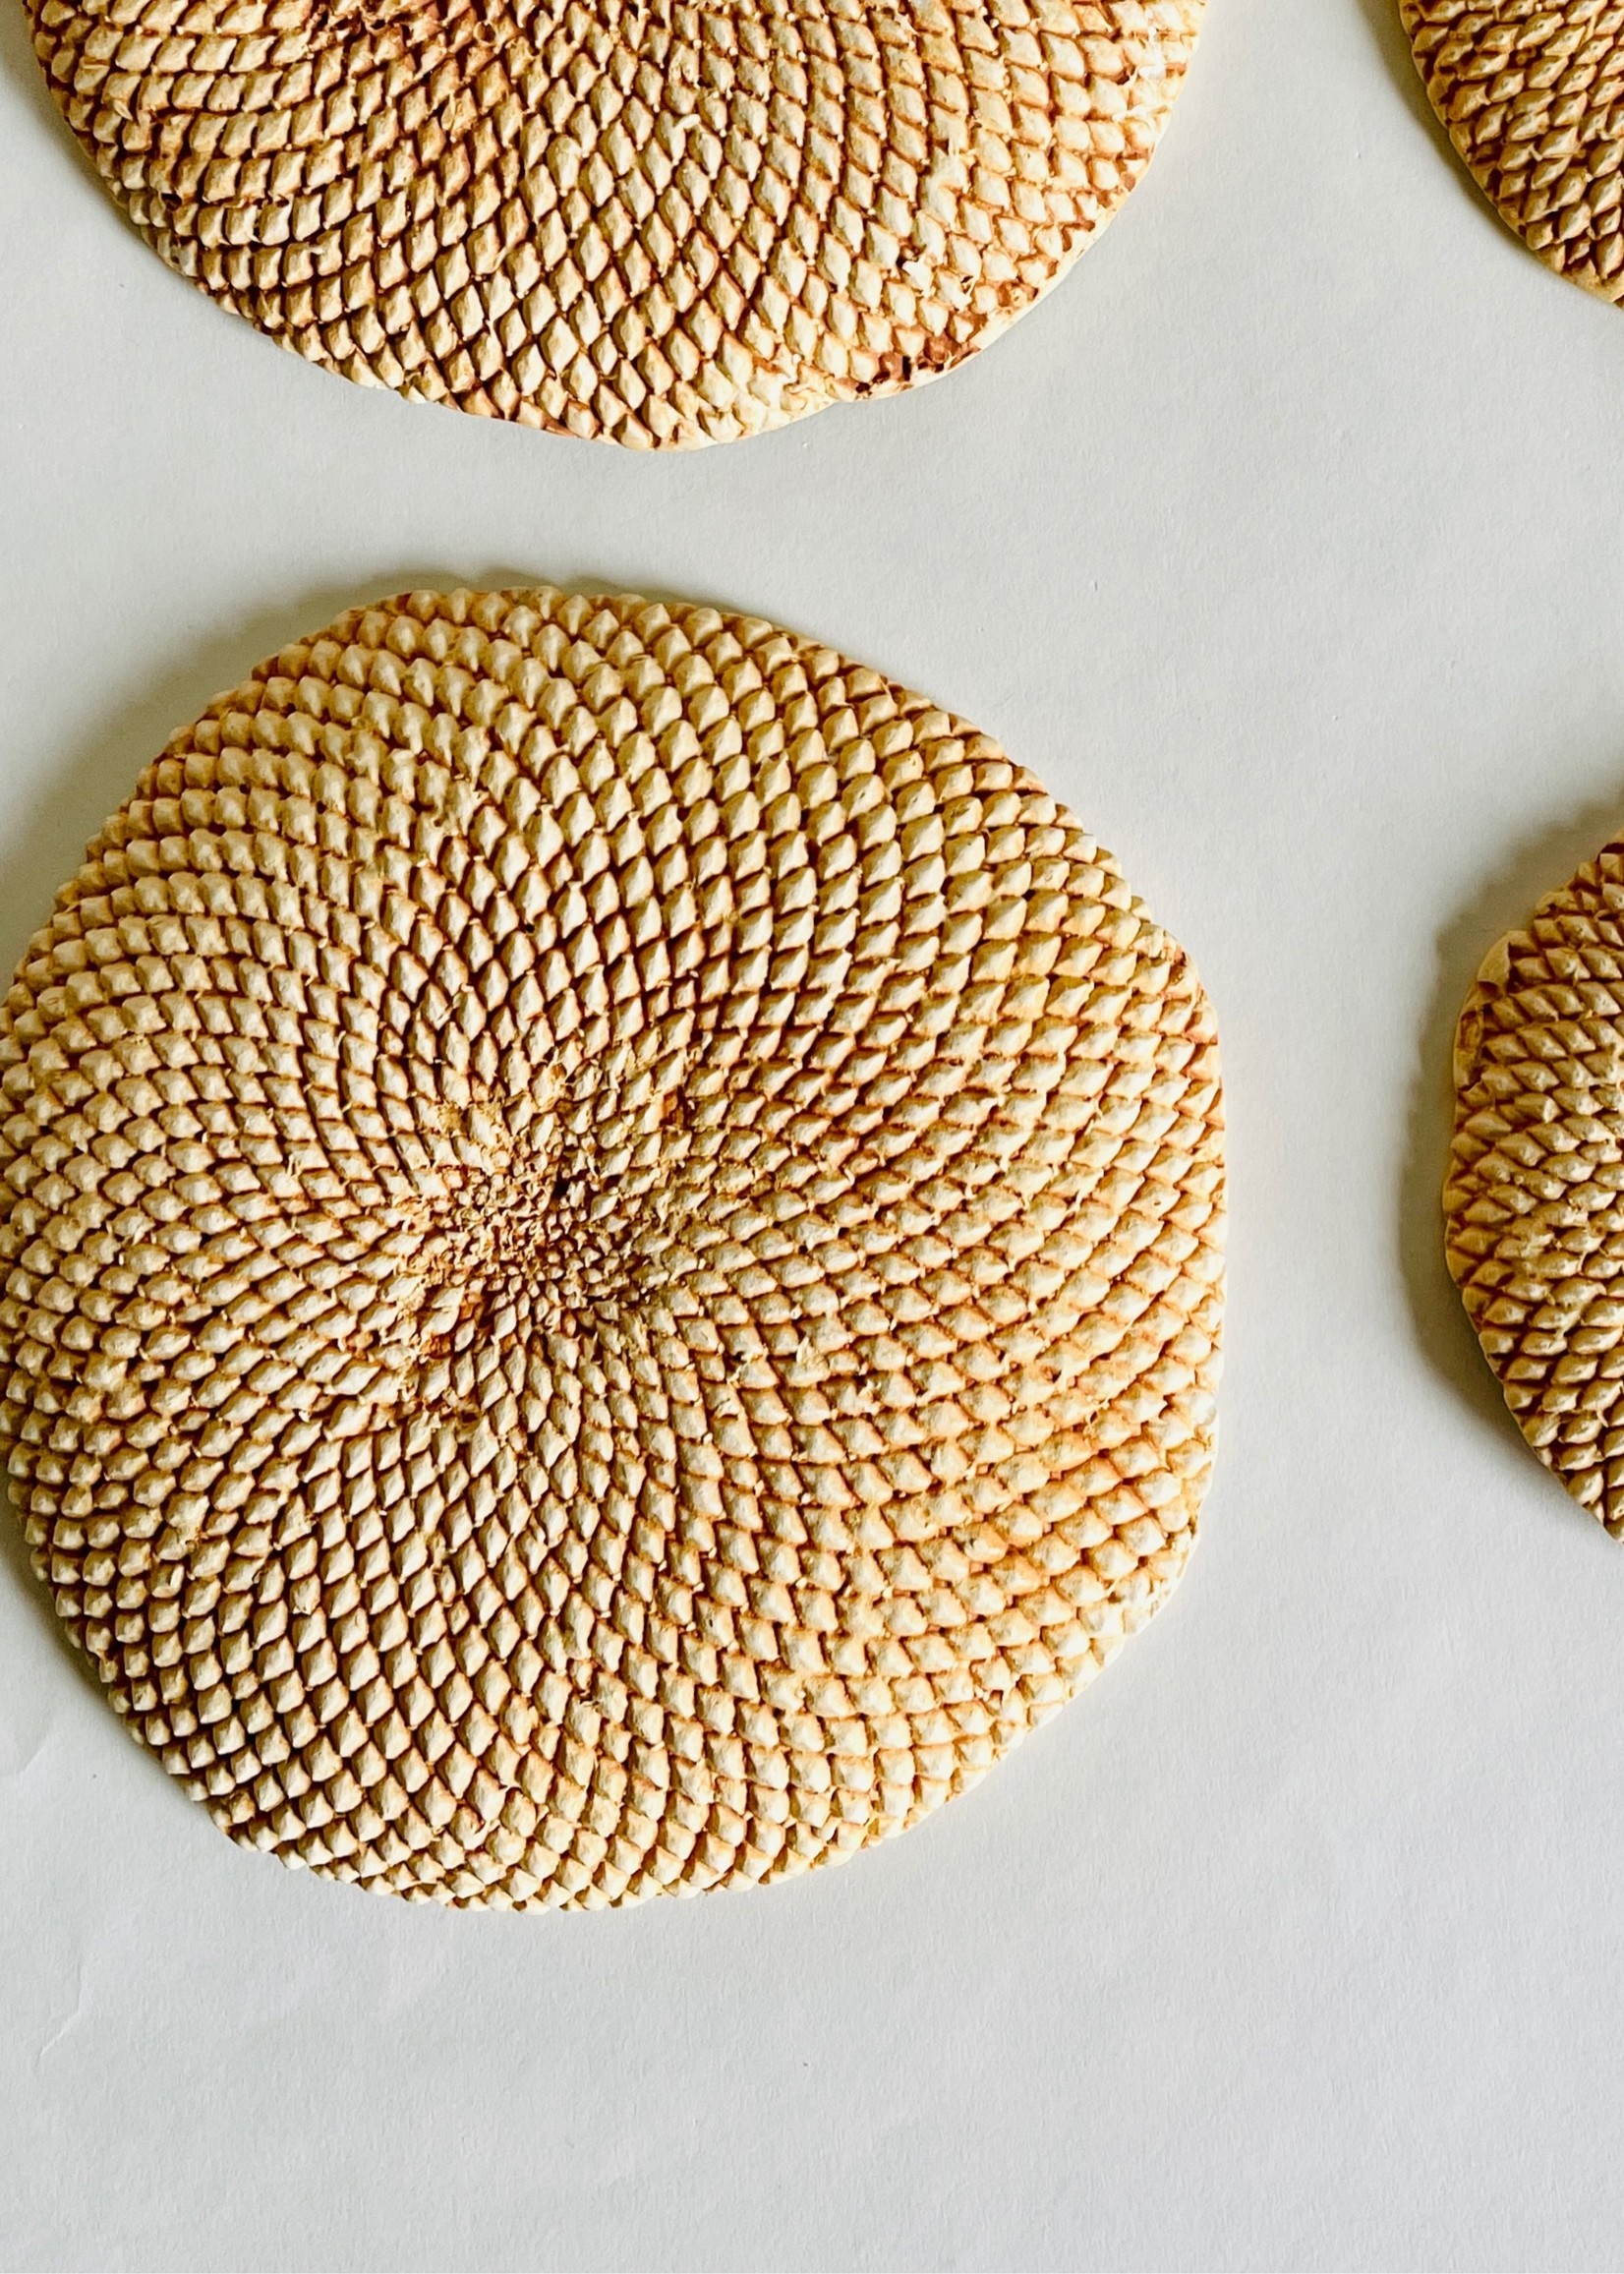 Beiko Ceramics Sunflower Plates - Small: Gun Metal